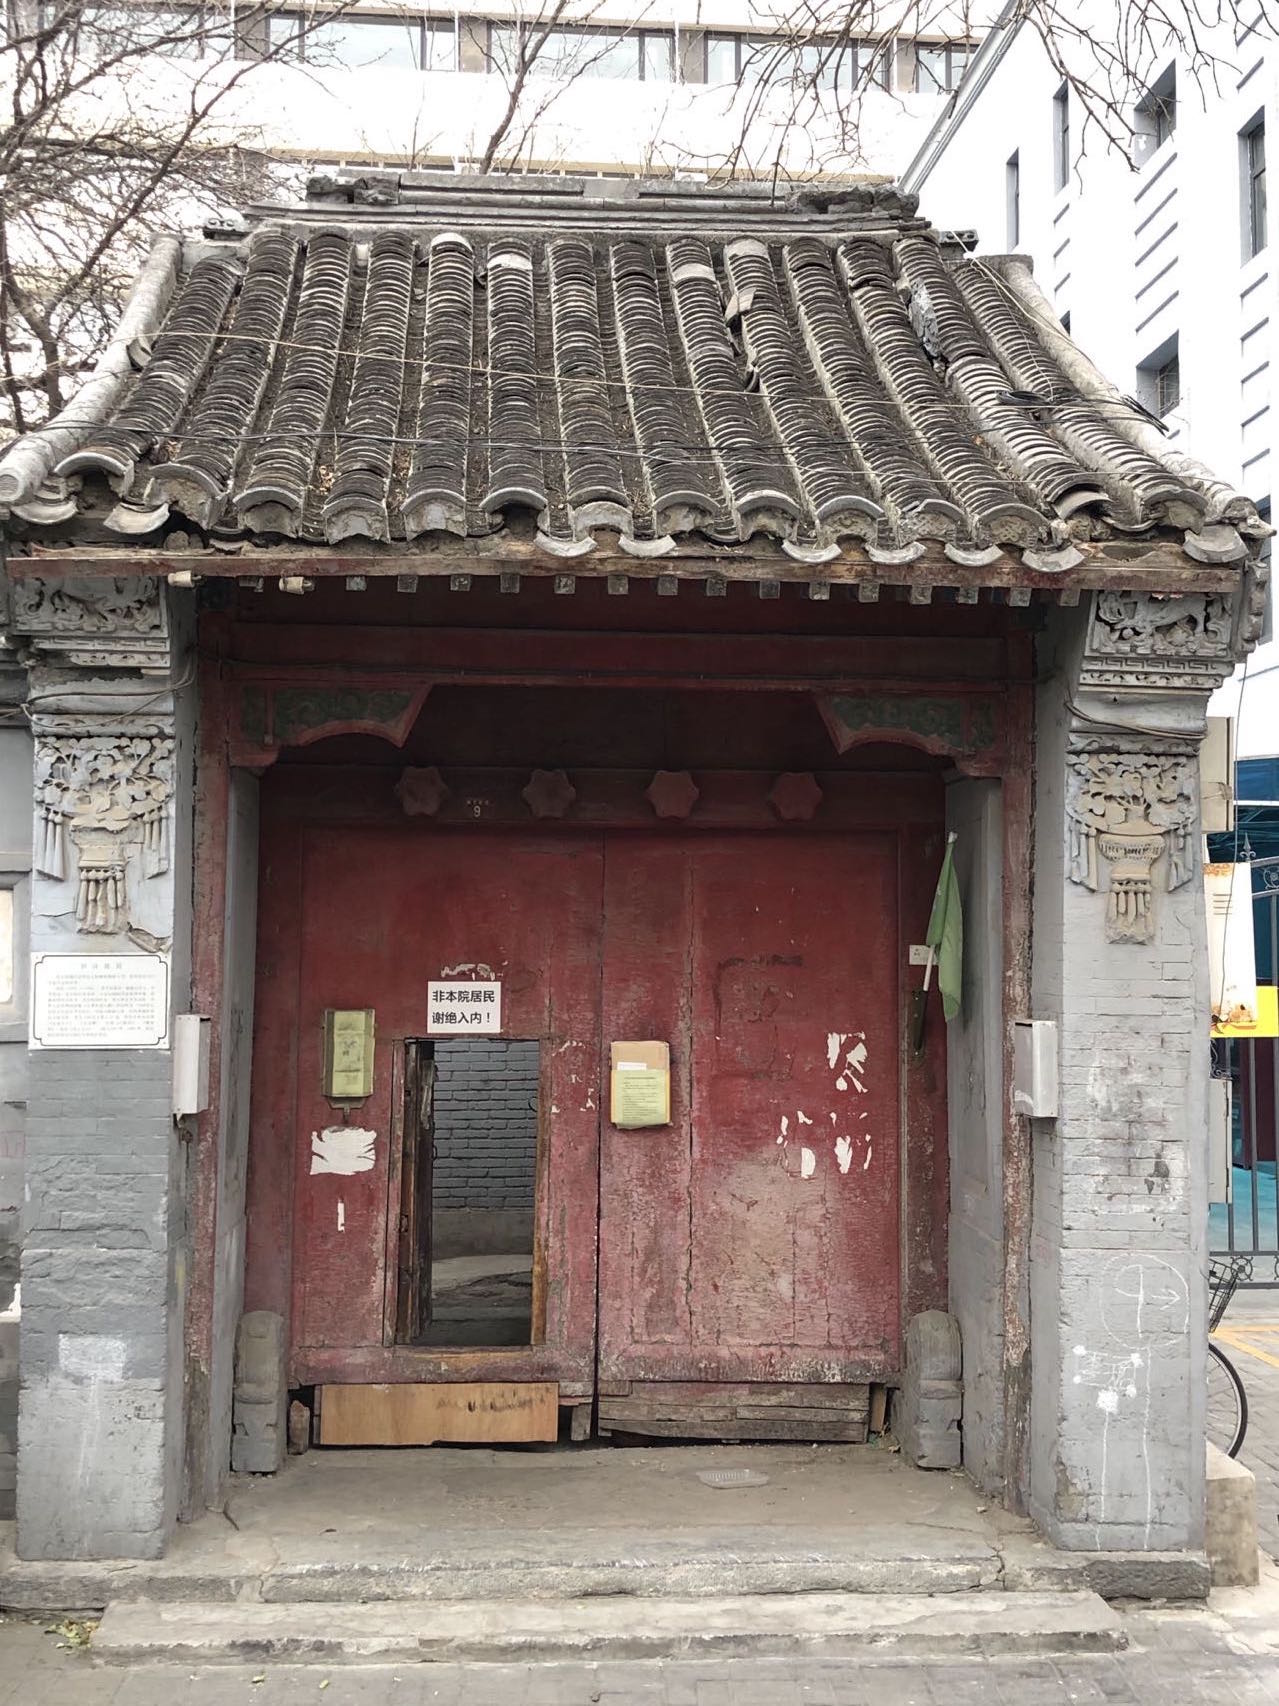 Tian-Han-s-former-residence-in-Xiguan-Hutong.-Image-via-That-s-Alistair-Baker-Brian.jpeg